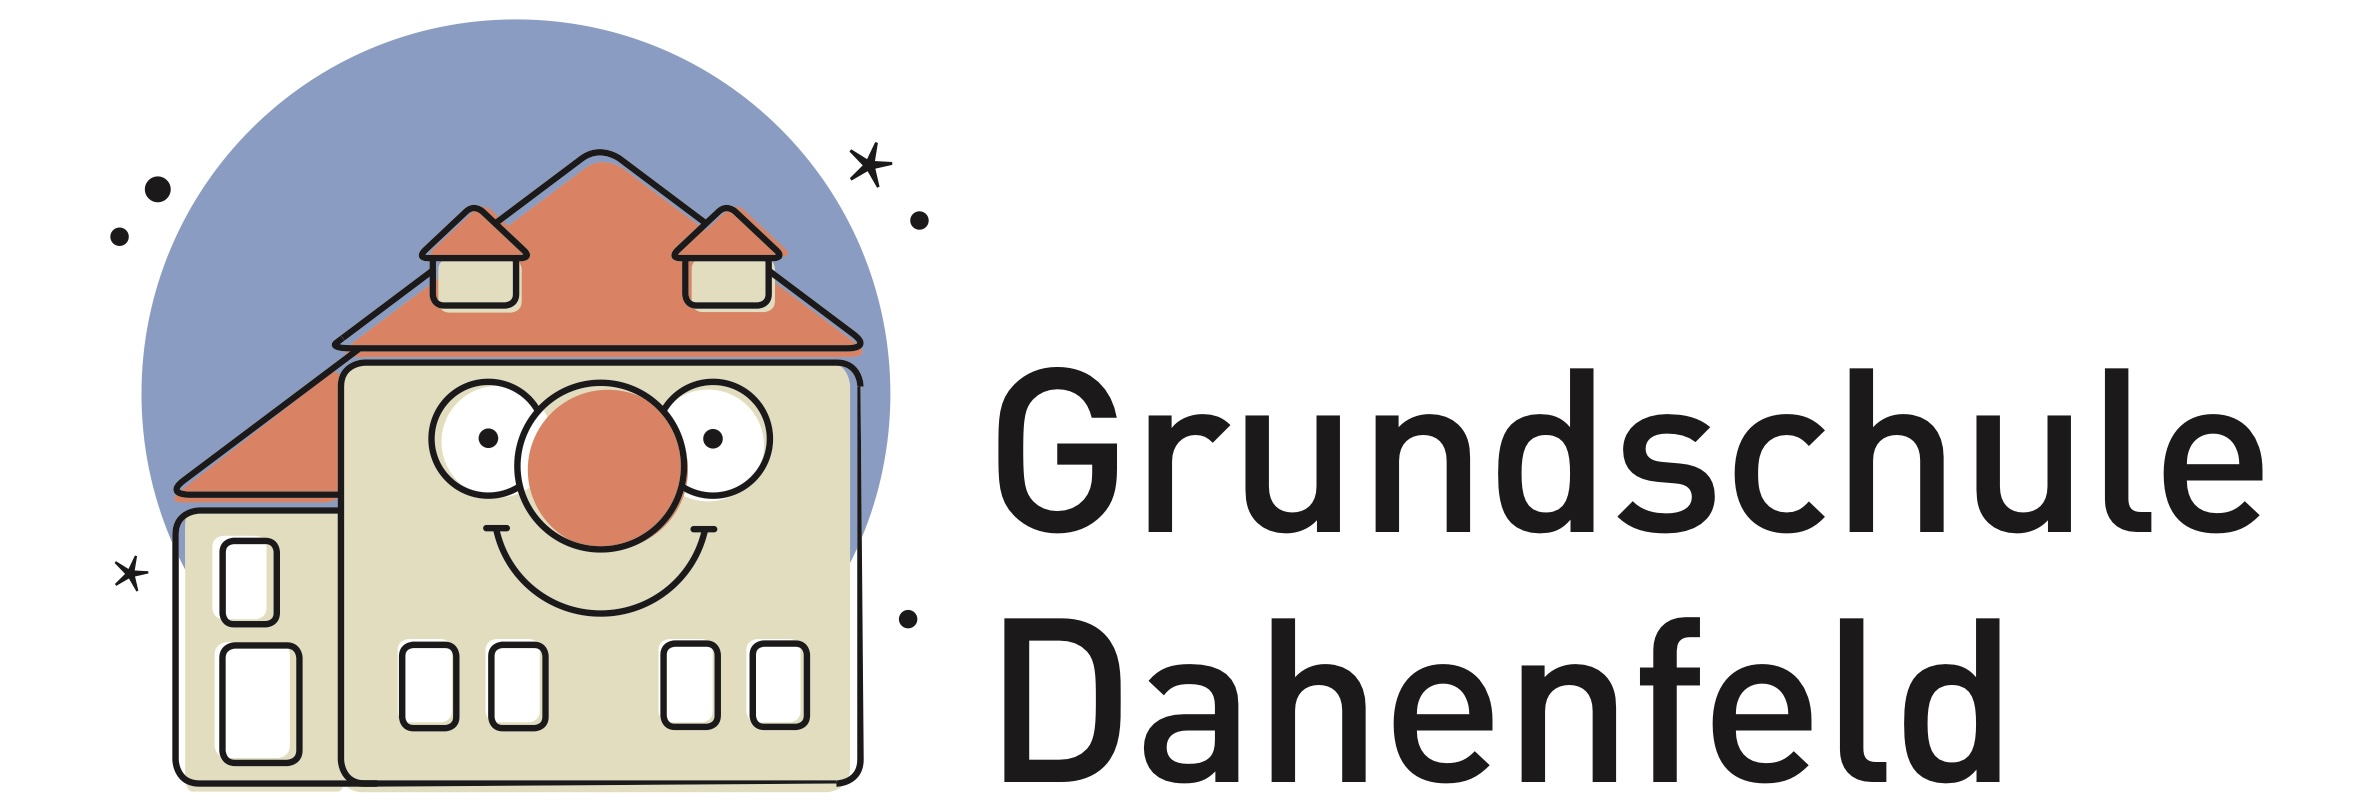 Grundschule Dahenfeld